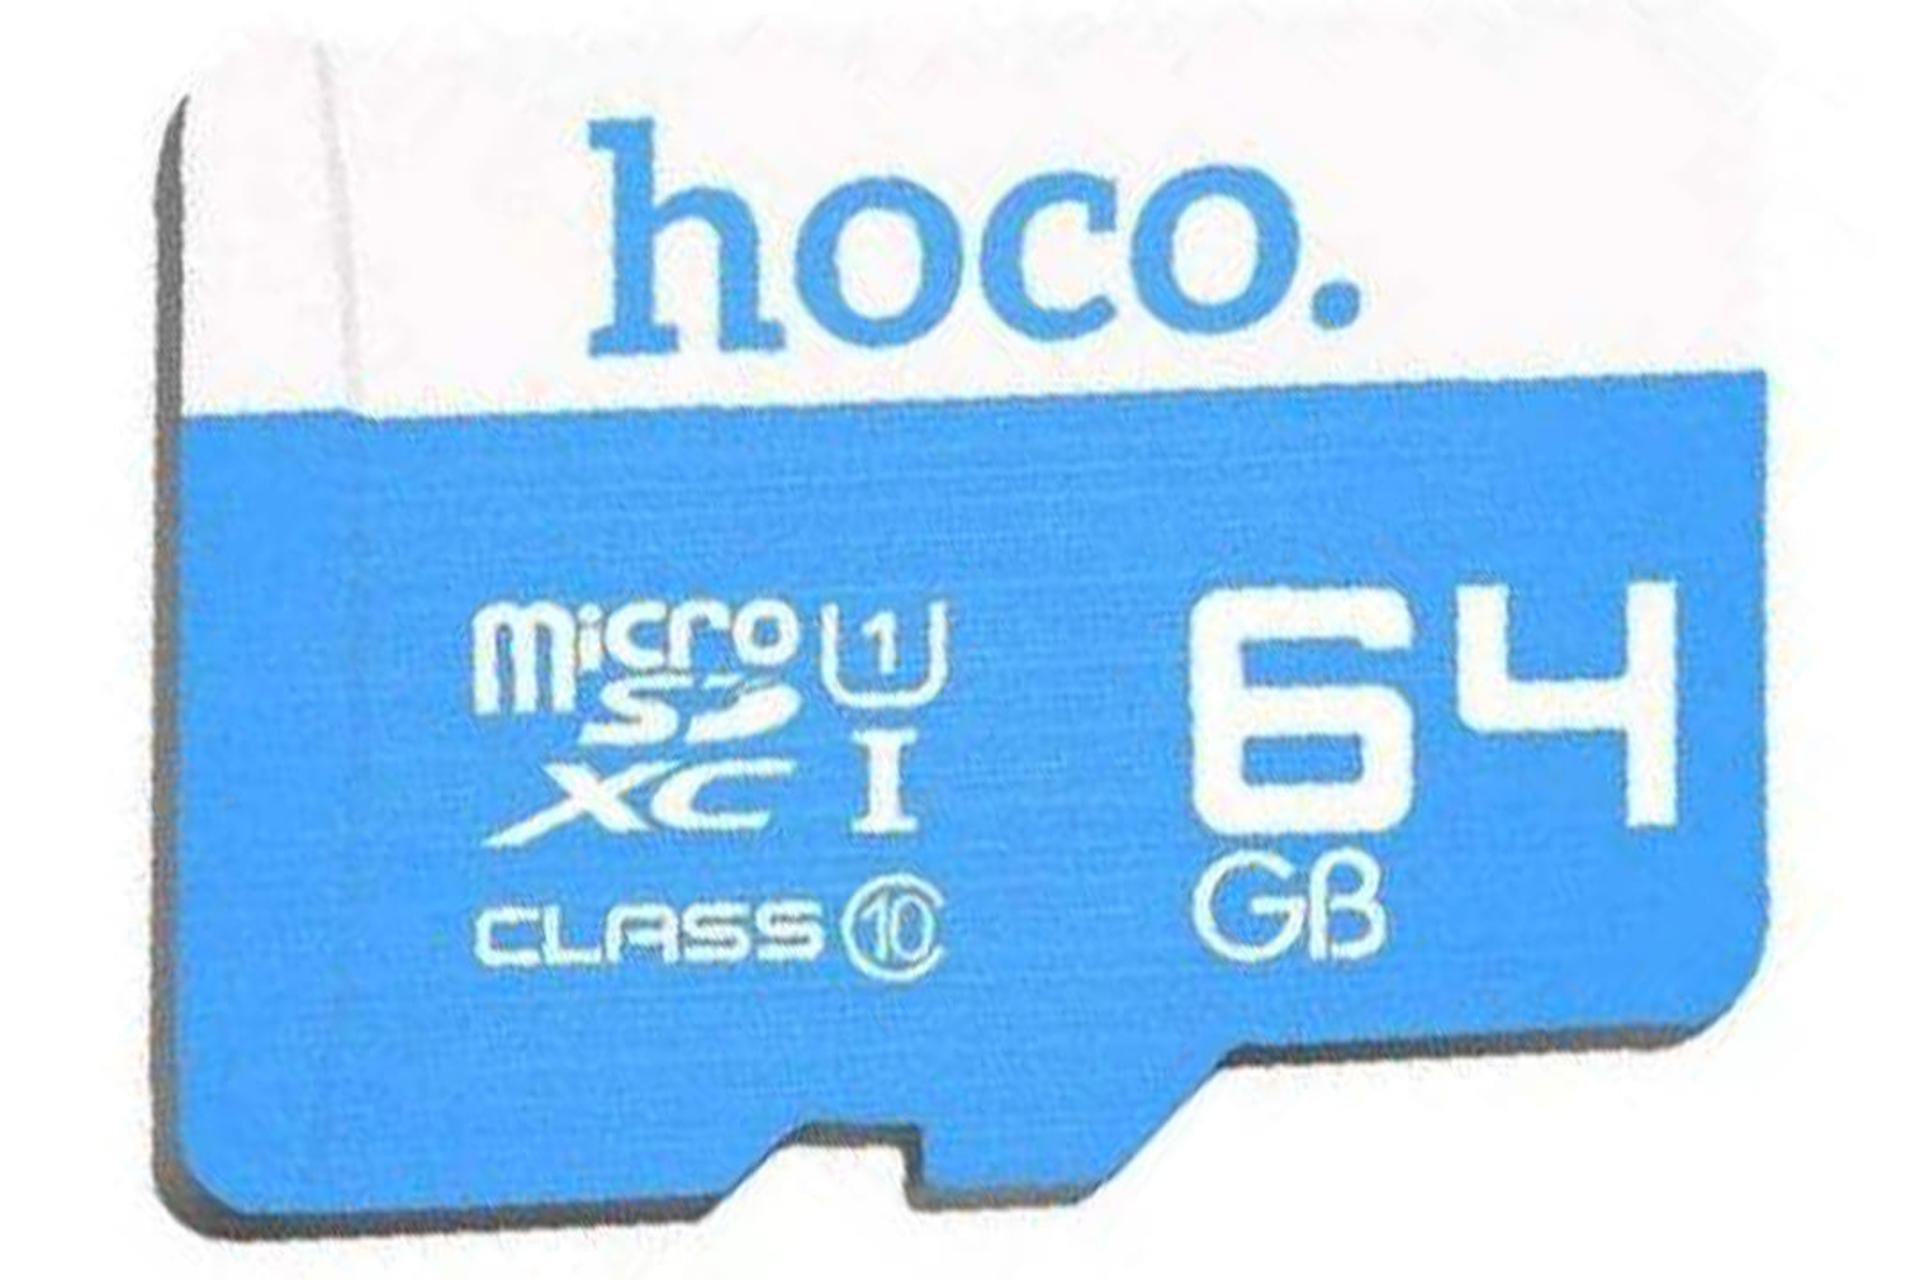 Hoco microSDXC Class 10 UHS-I U1 64GB